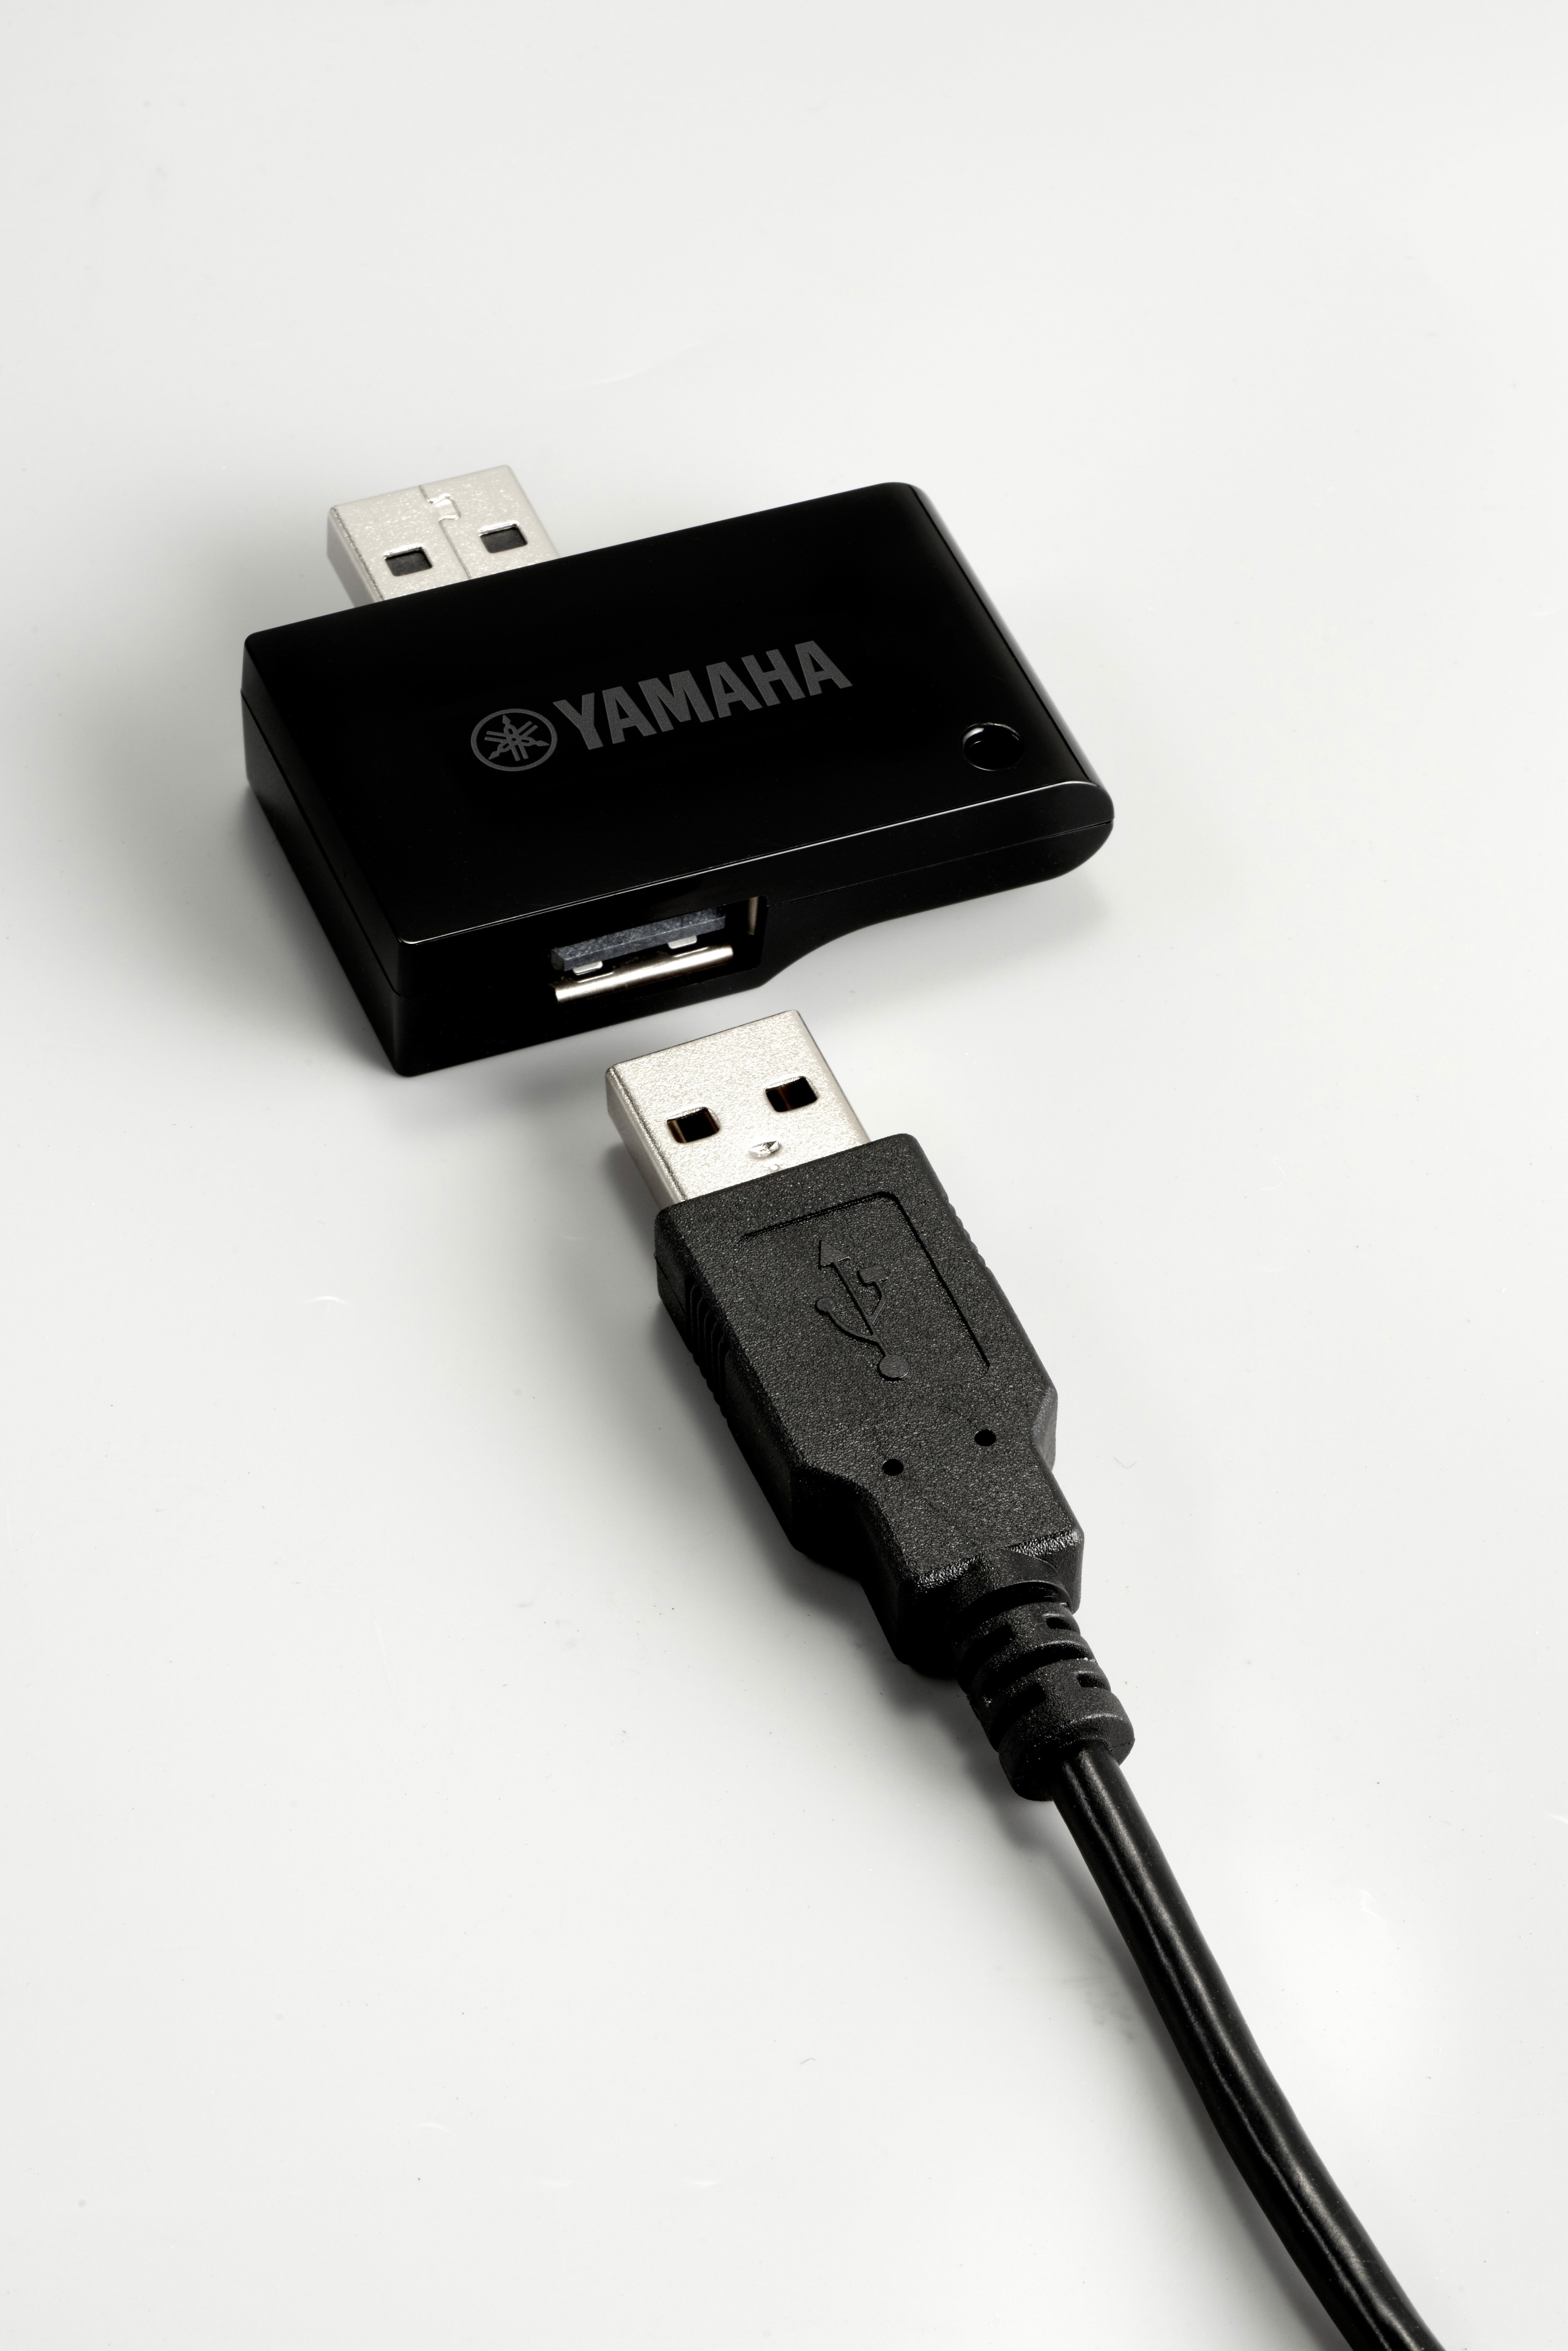 Yamaha MDBT01 Bluetooth MIDI Adapter 1 Stück & TIE Studio professionelles latenzfreies Midi schwarz USB-Typ A Interface inkl. Oktokoppler, 2, 0 m, Plug & Play, stabiles Timing, Windows und Mac OSX 